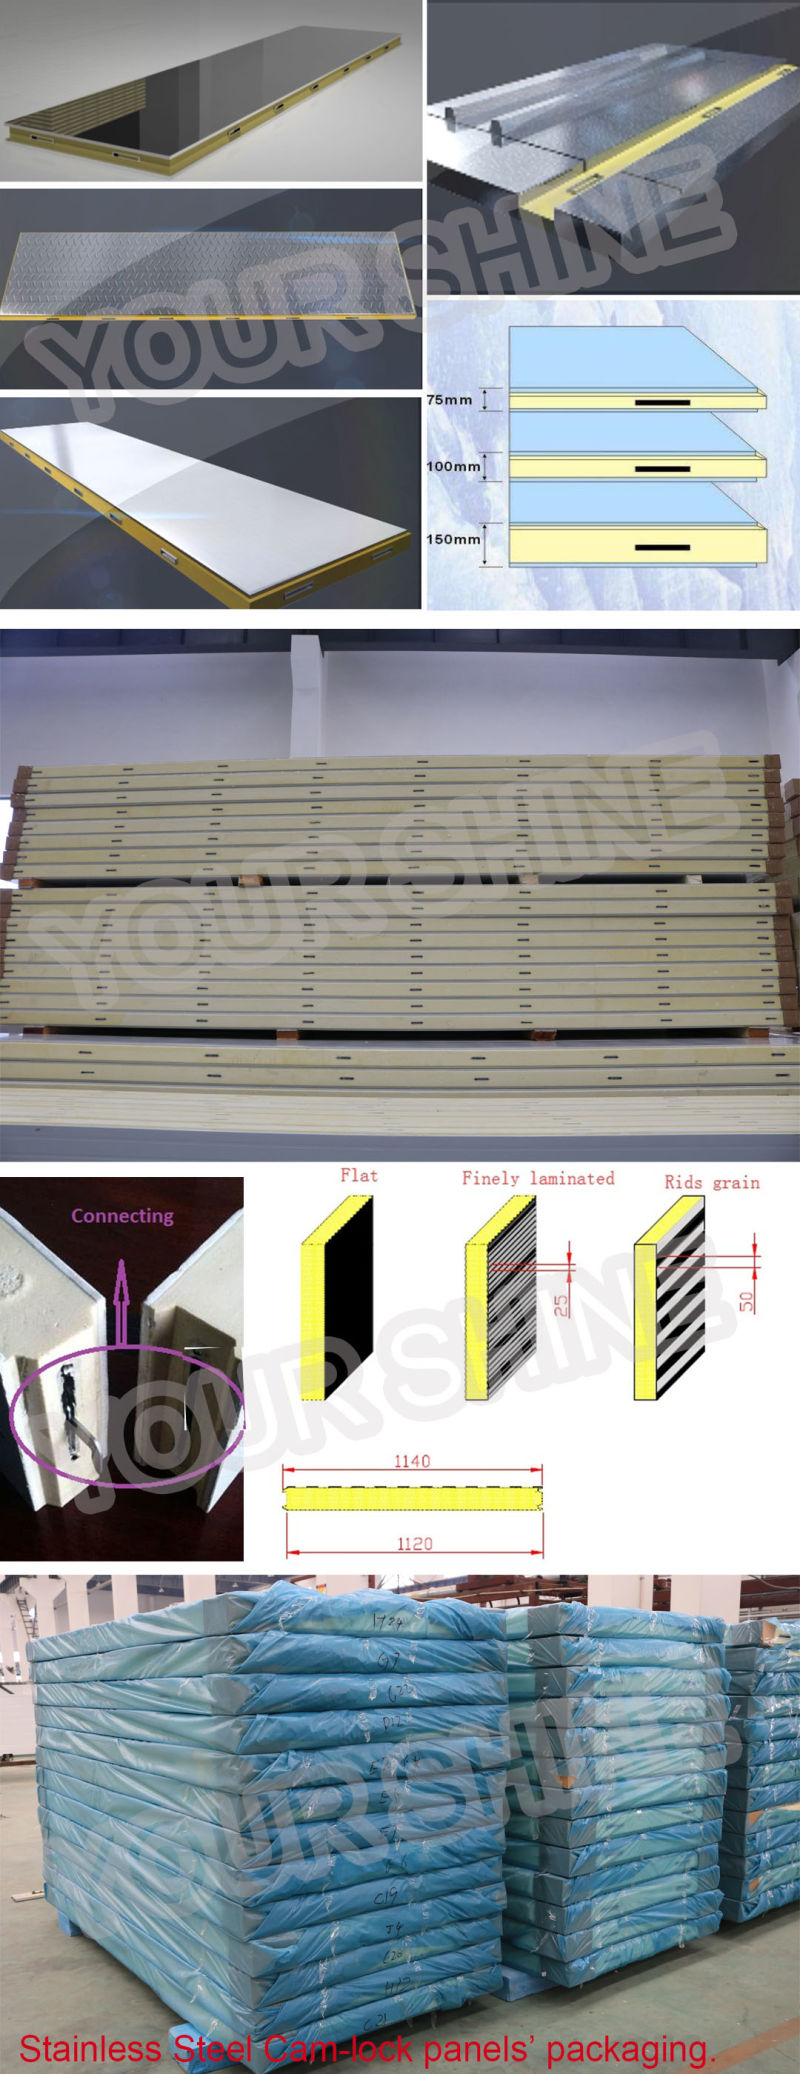 Lightweight Heat Insulation PU/PIR Sandwich Panels for Roof Use Easy